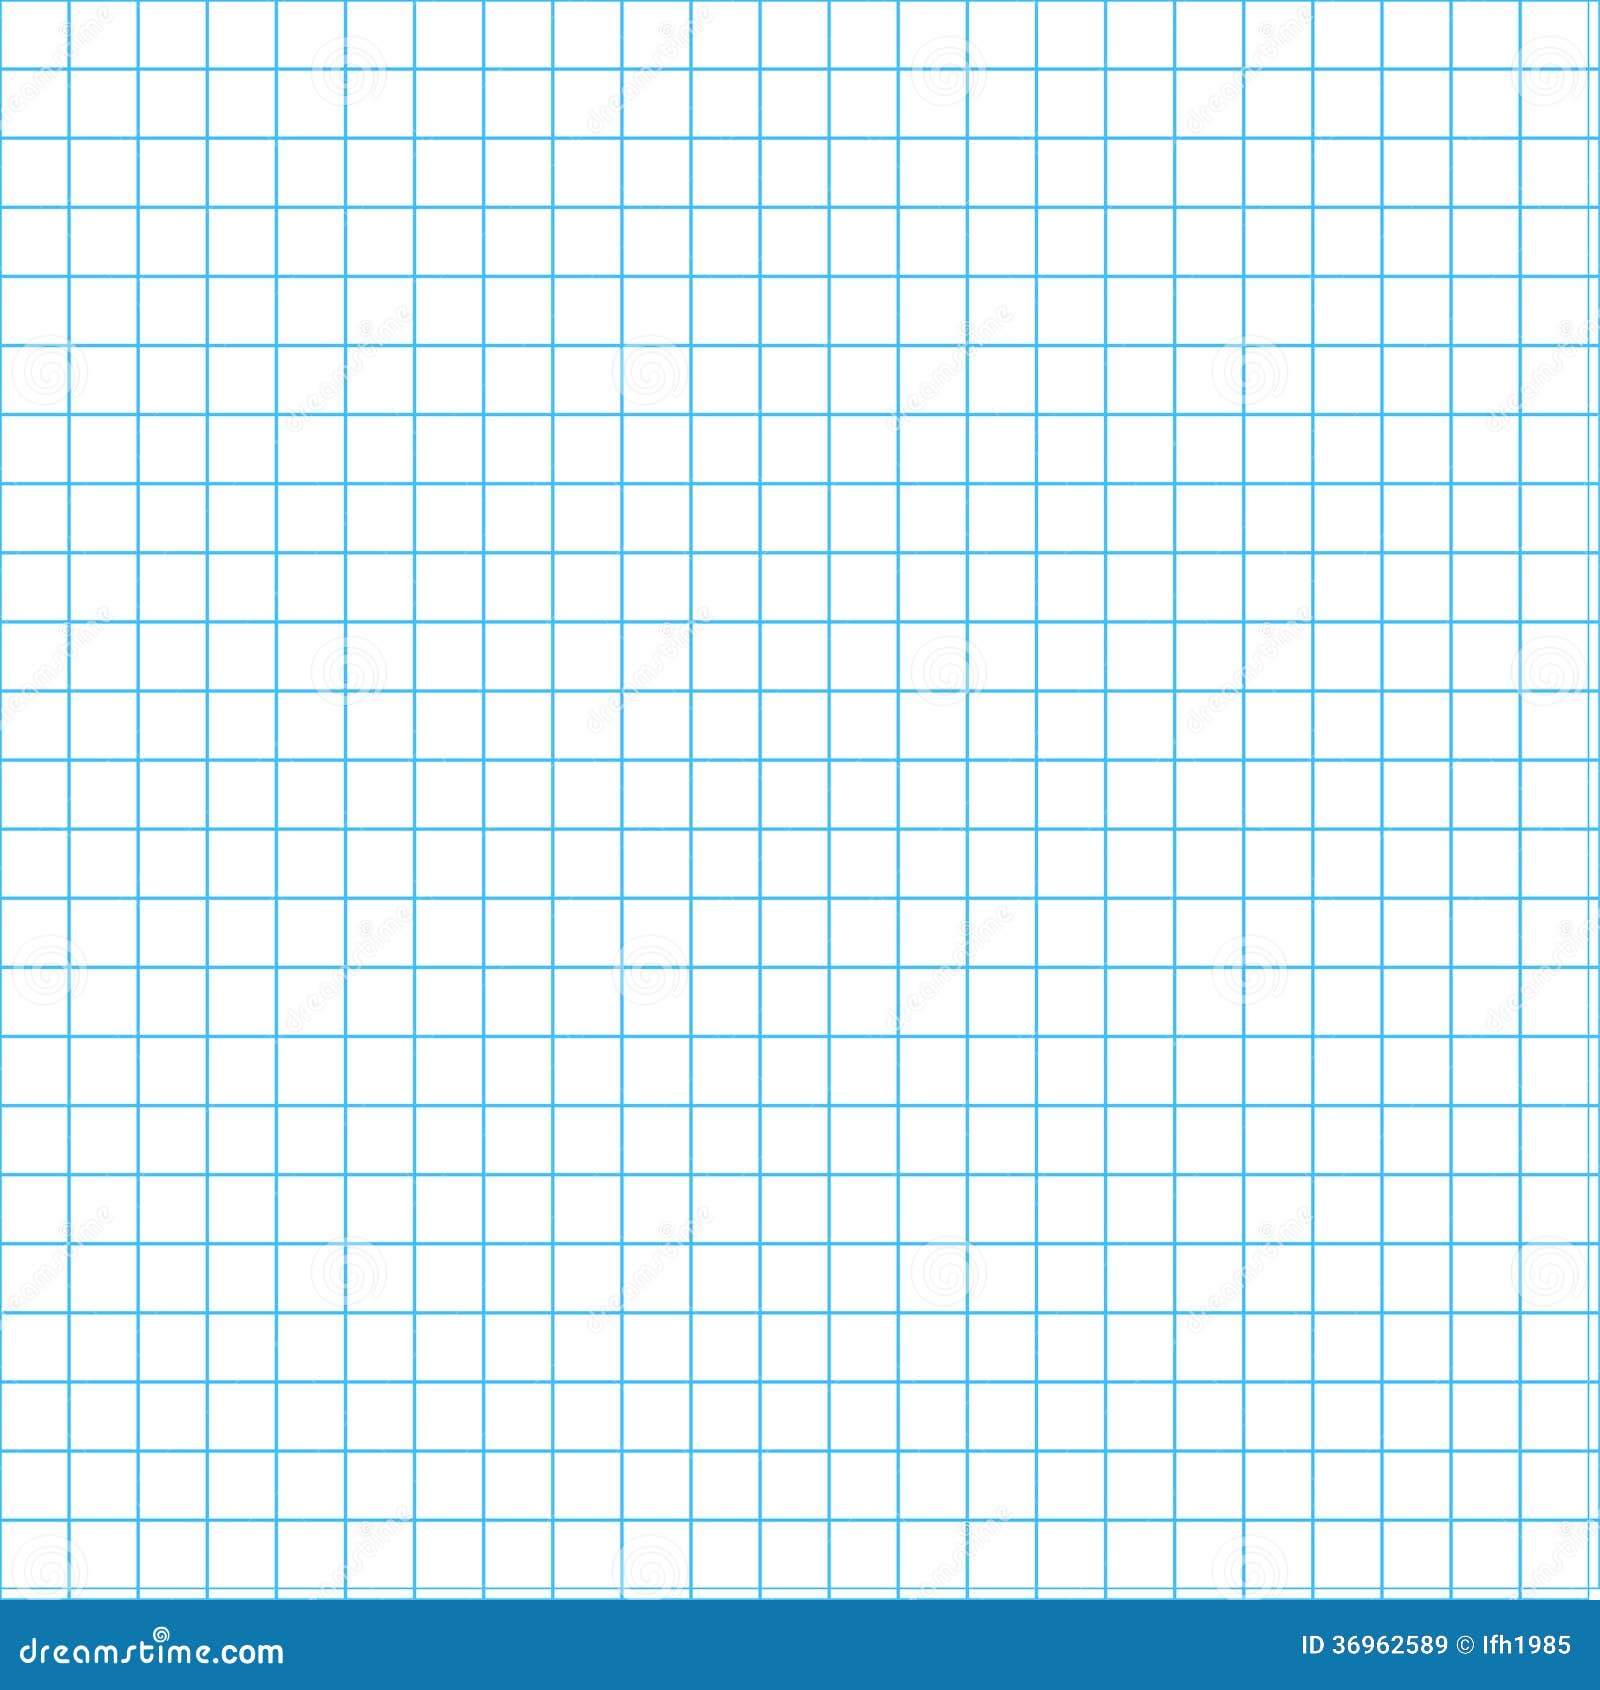 Download 60 Background Blue Grid HD Paling Keren